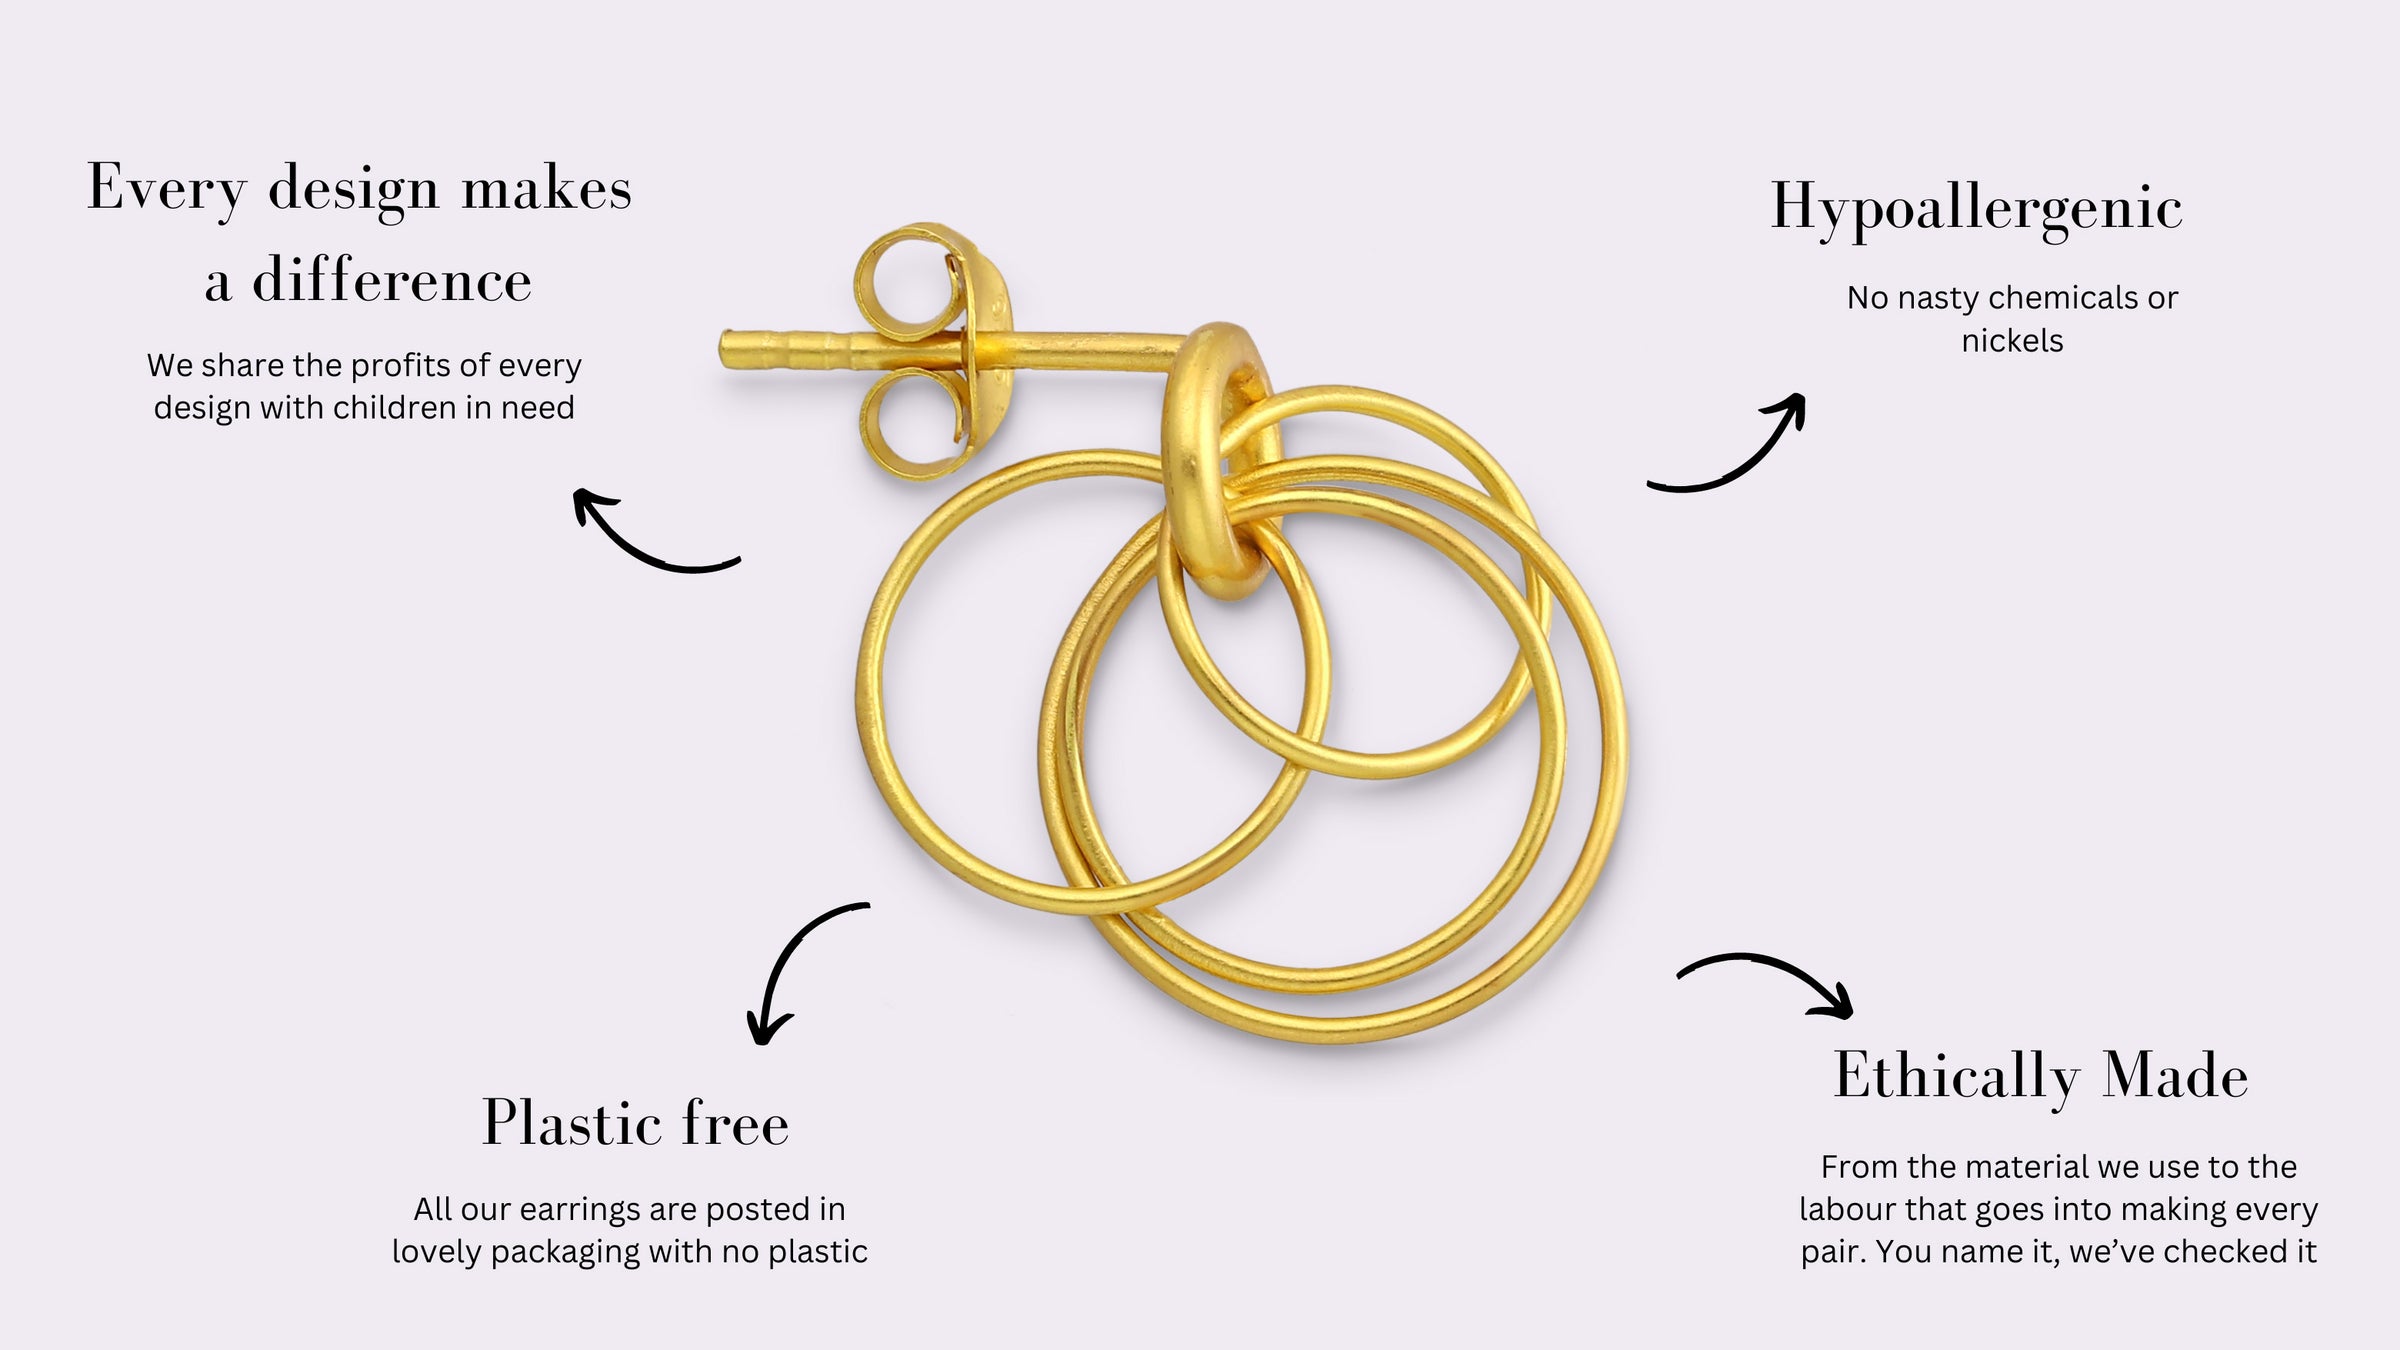 Hypoallergenic nickel free ethically made jewellery - Vurchoo Jewellery